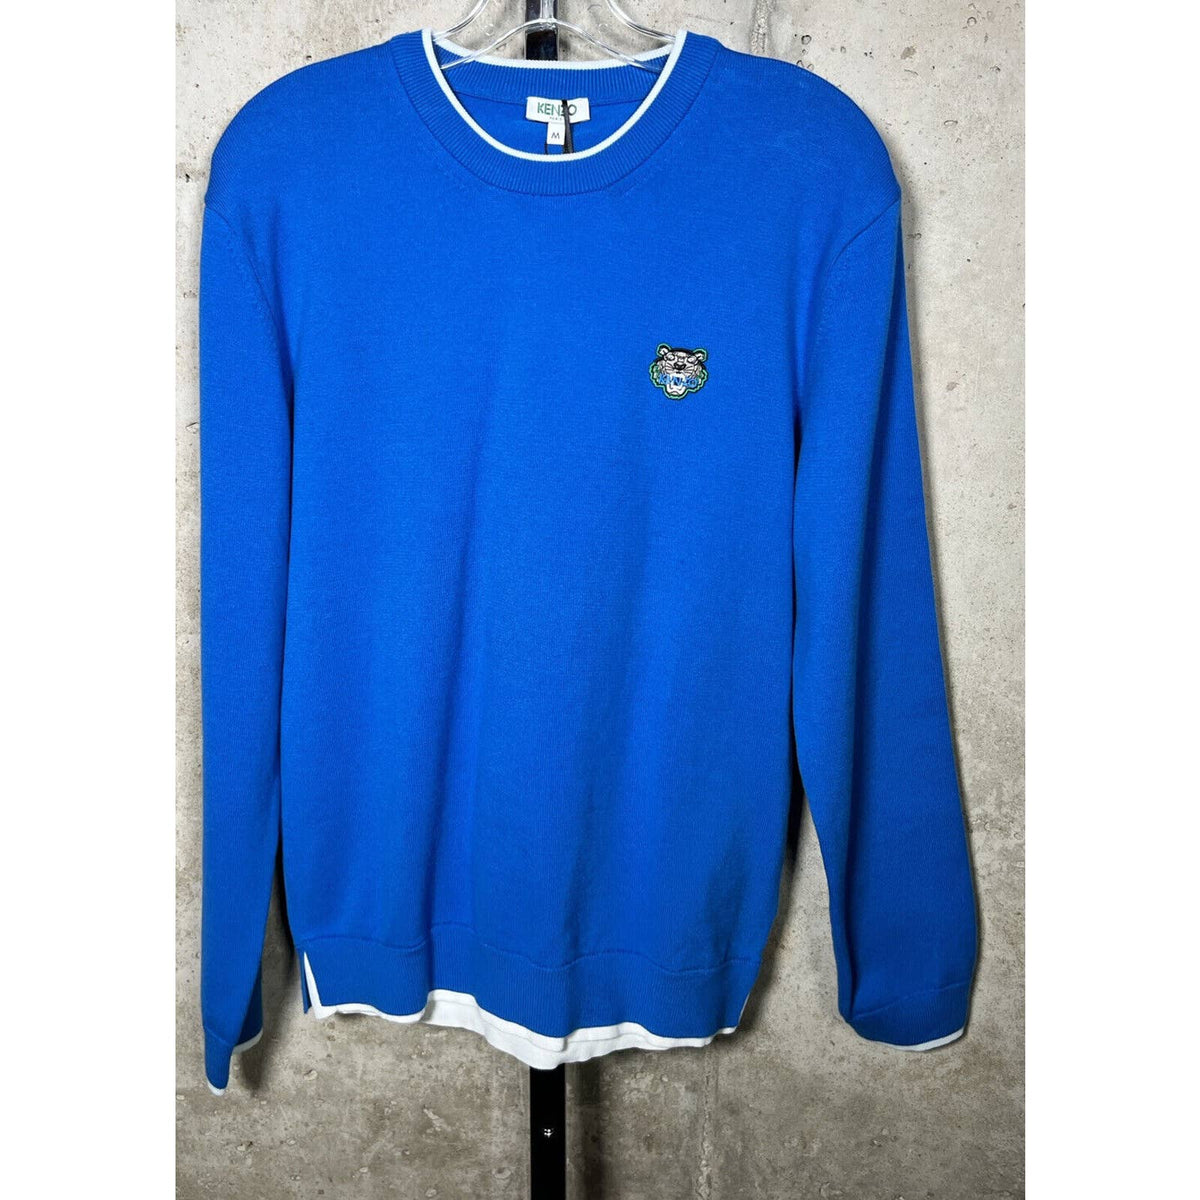 Kenzo Tiger Crest Sweatershirt Sz. Medium NEW